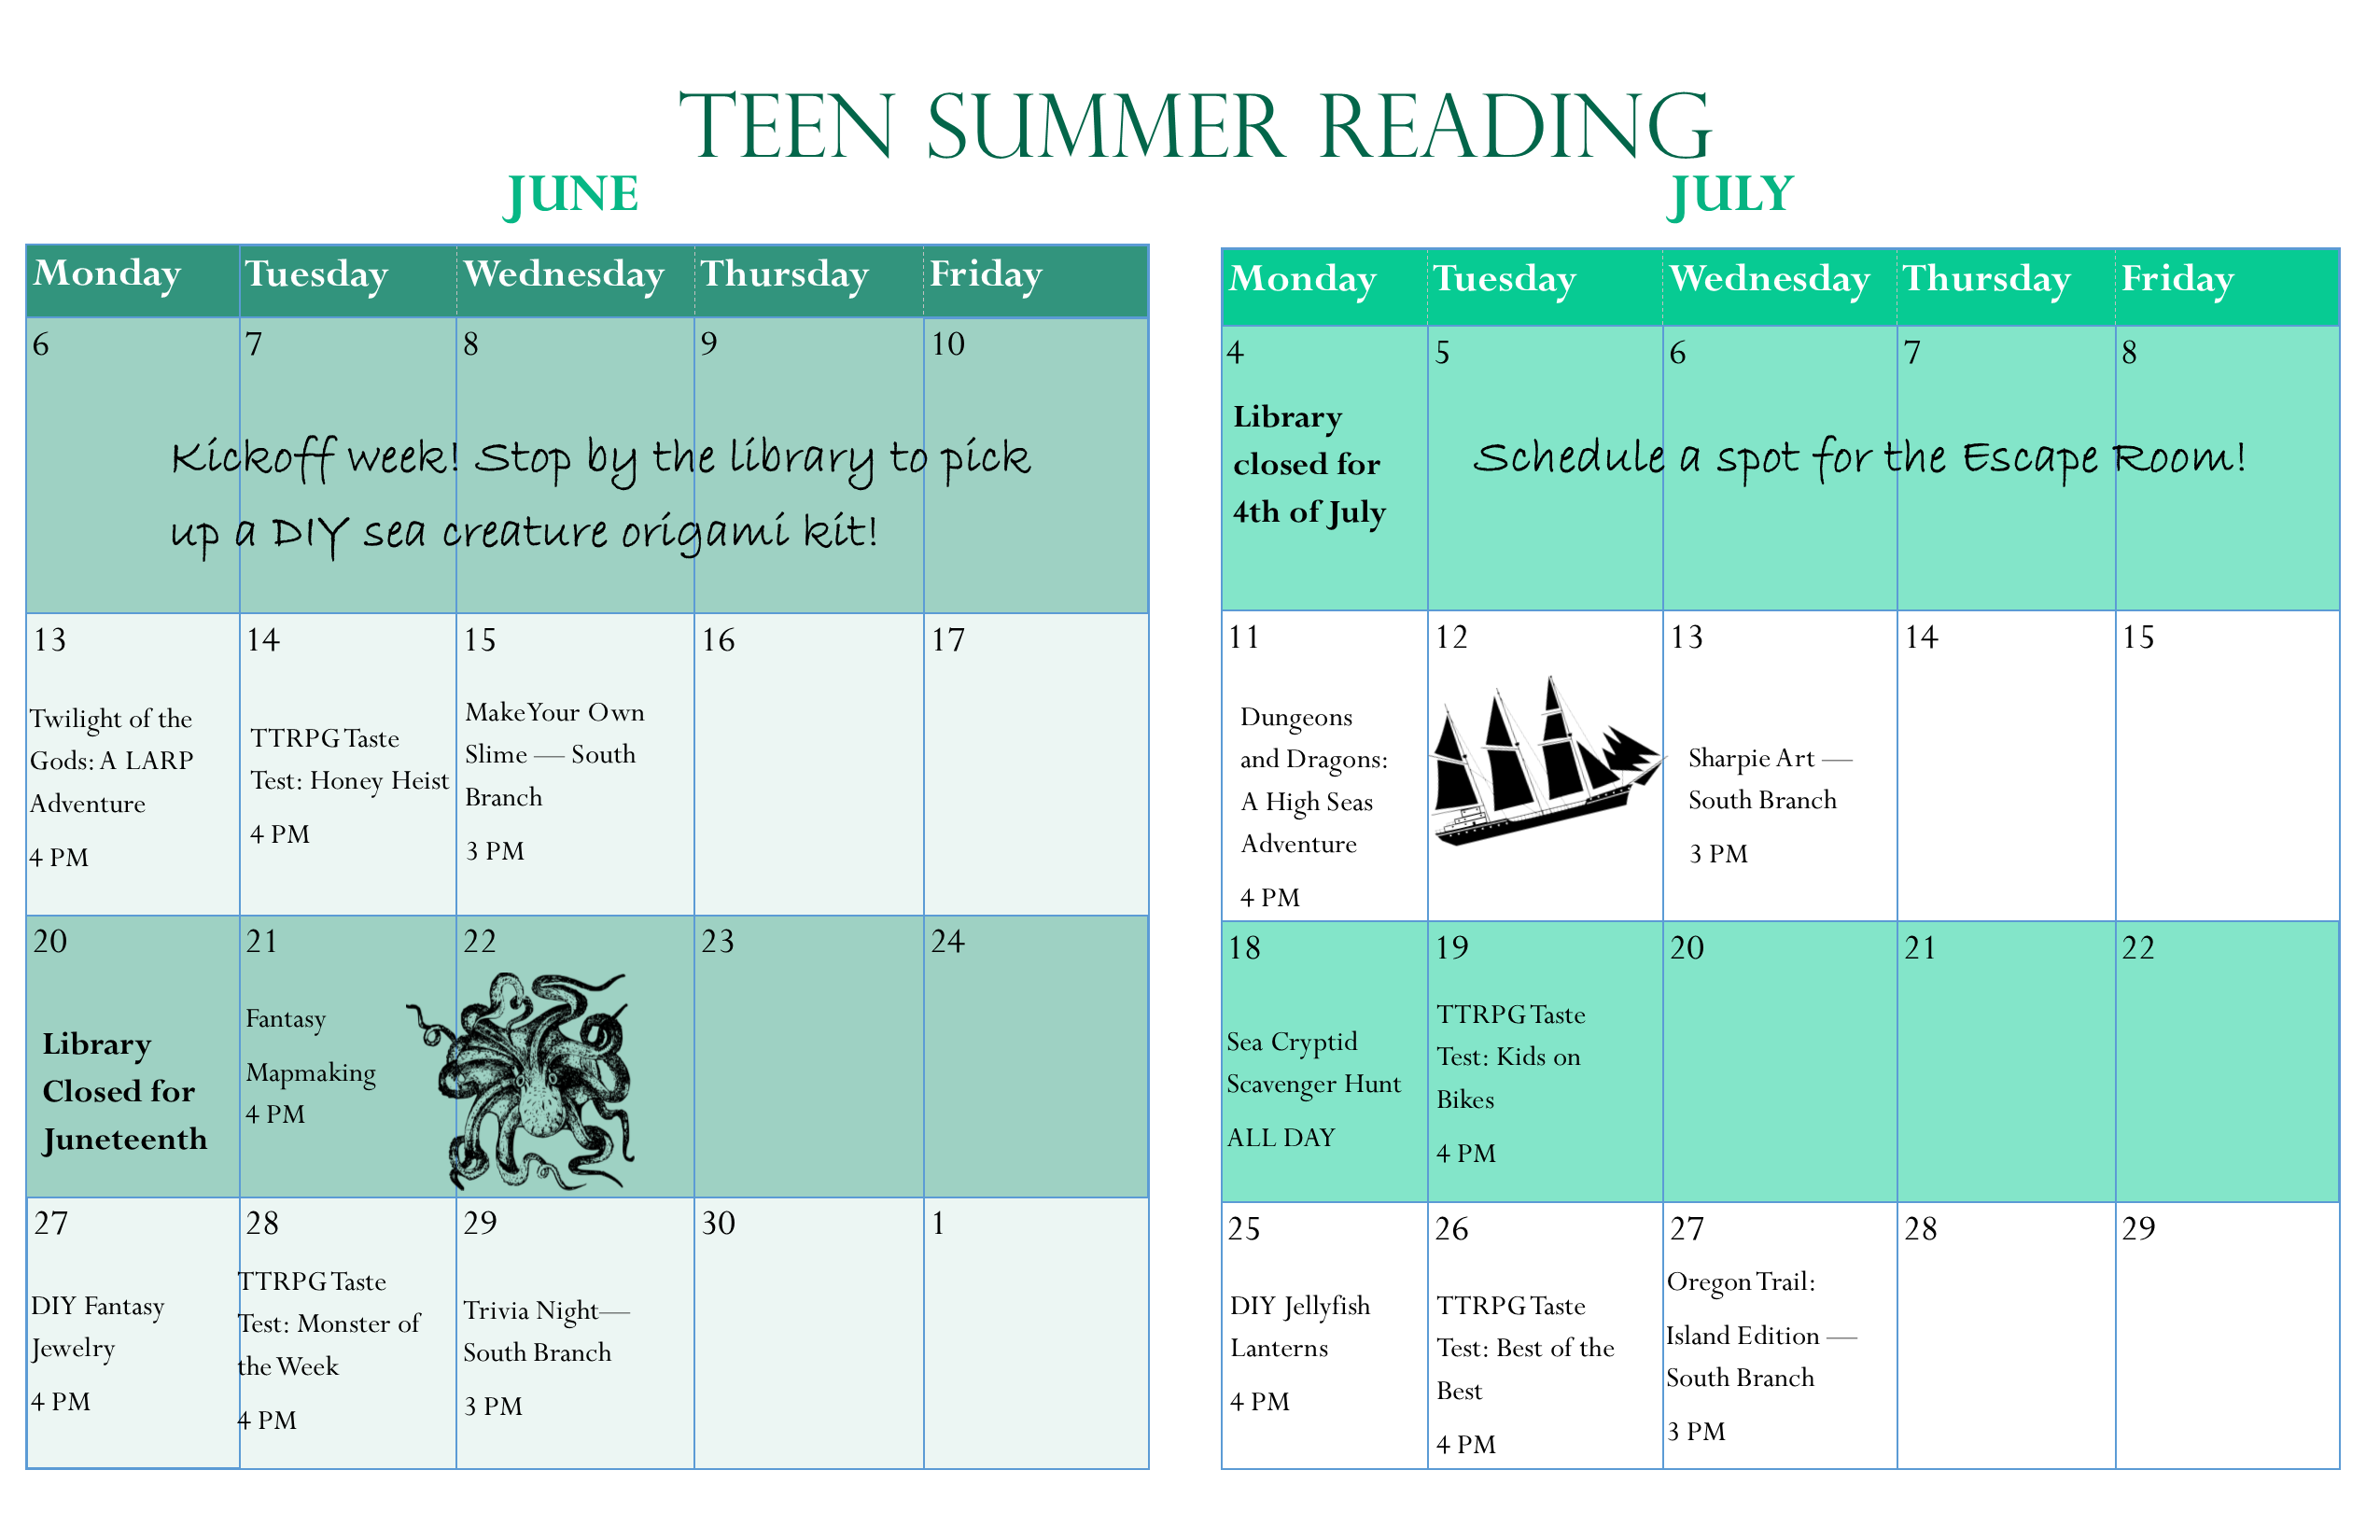 Teen Summer Reading Program at Emerson